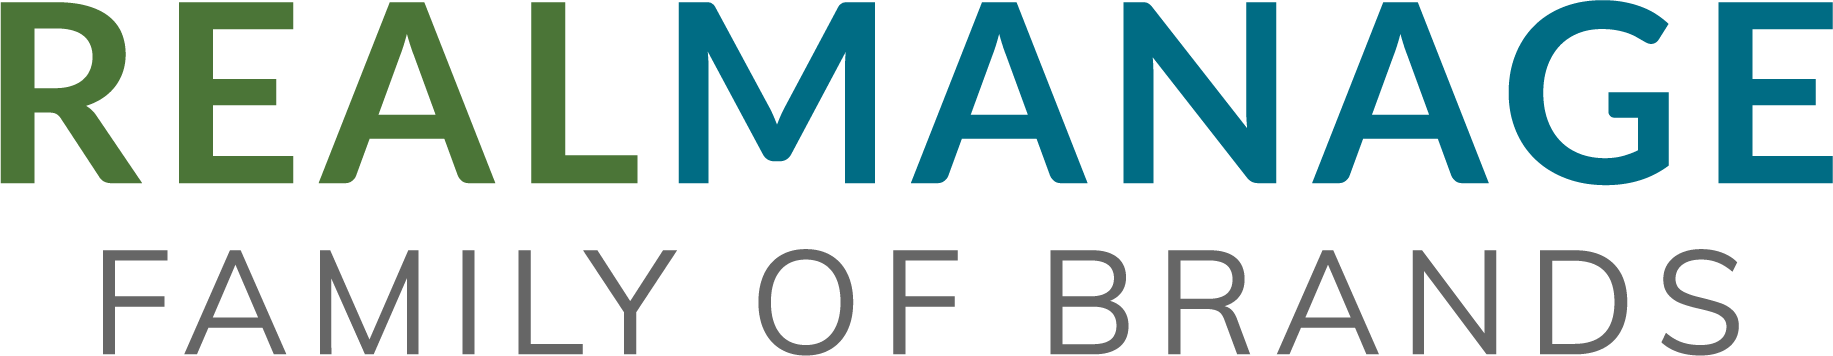 RealManage Family of Brands - Phoenix logo